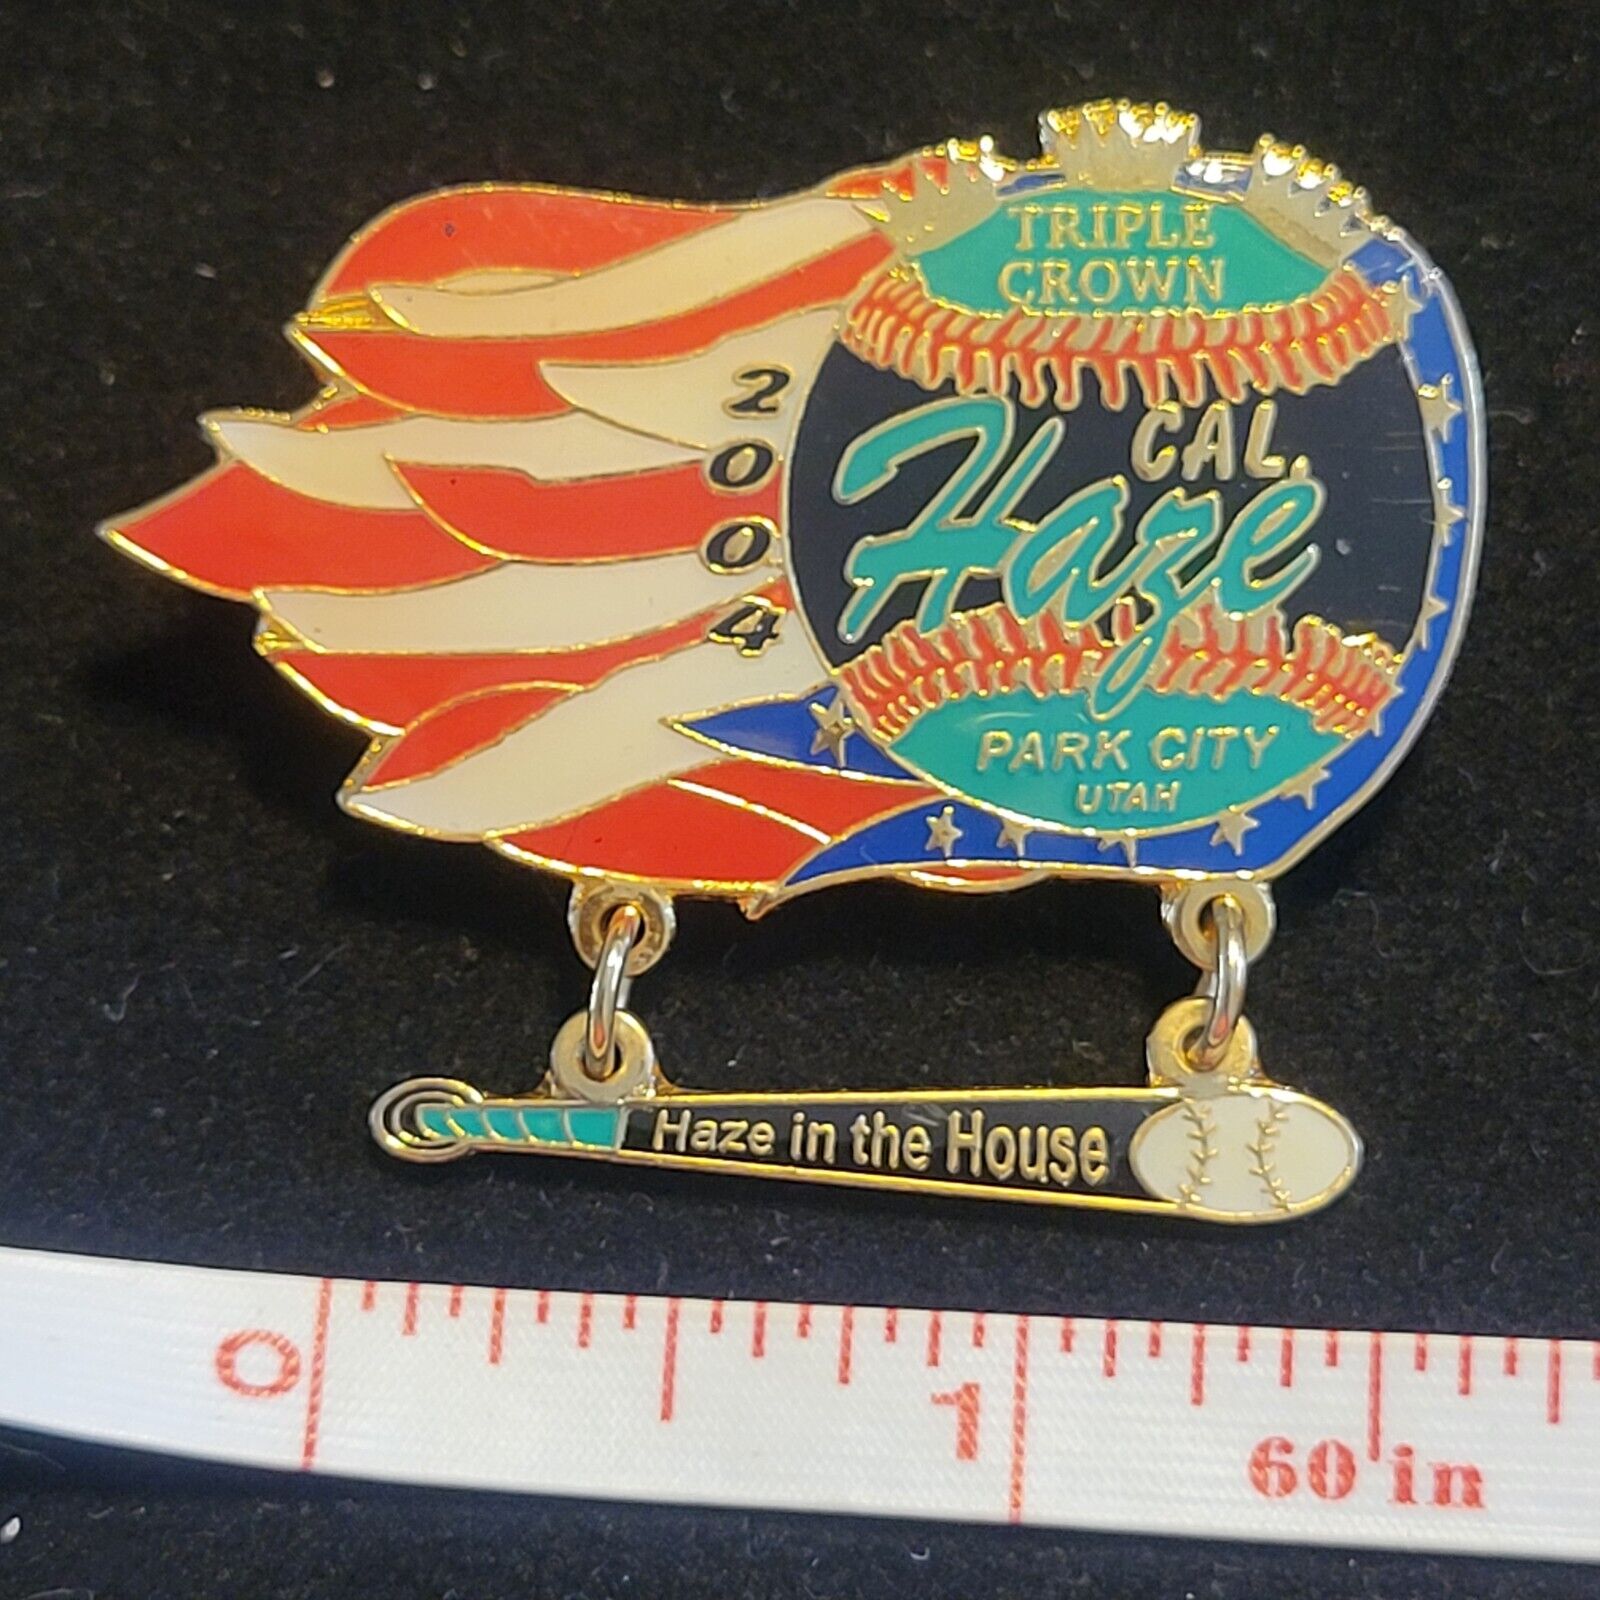 Cal Haze Park City Utah Triple Crown 2004 Softball Fastpitch Cap Pin Souvenir